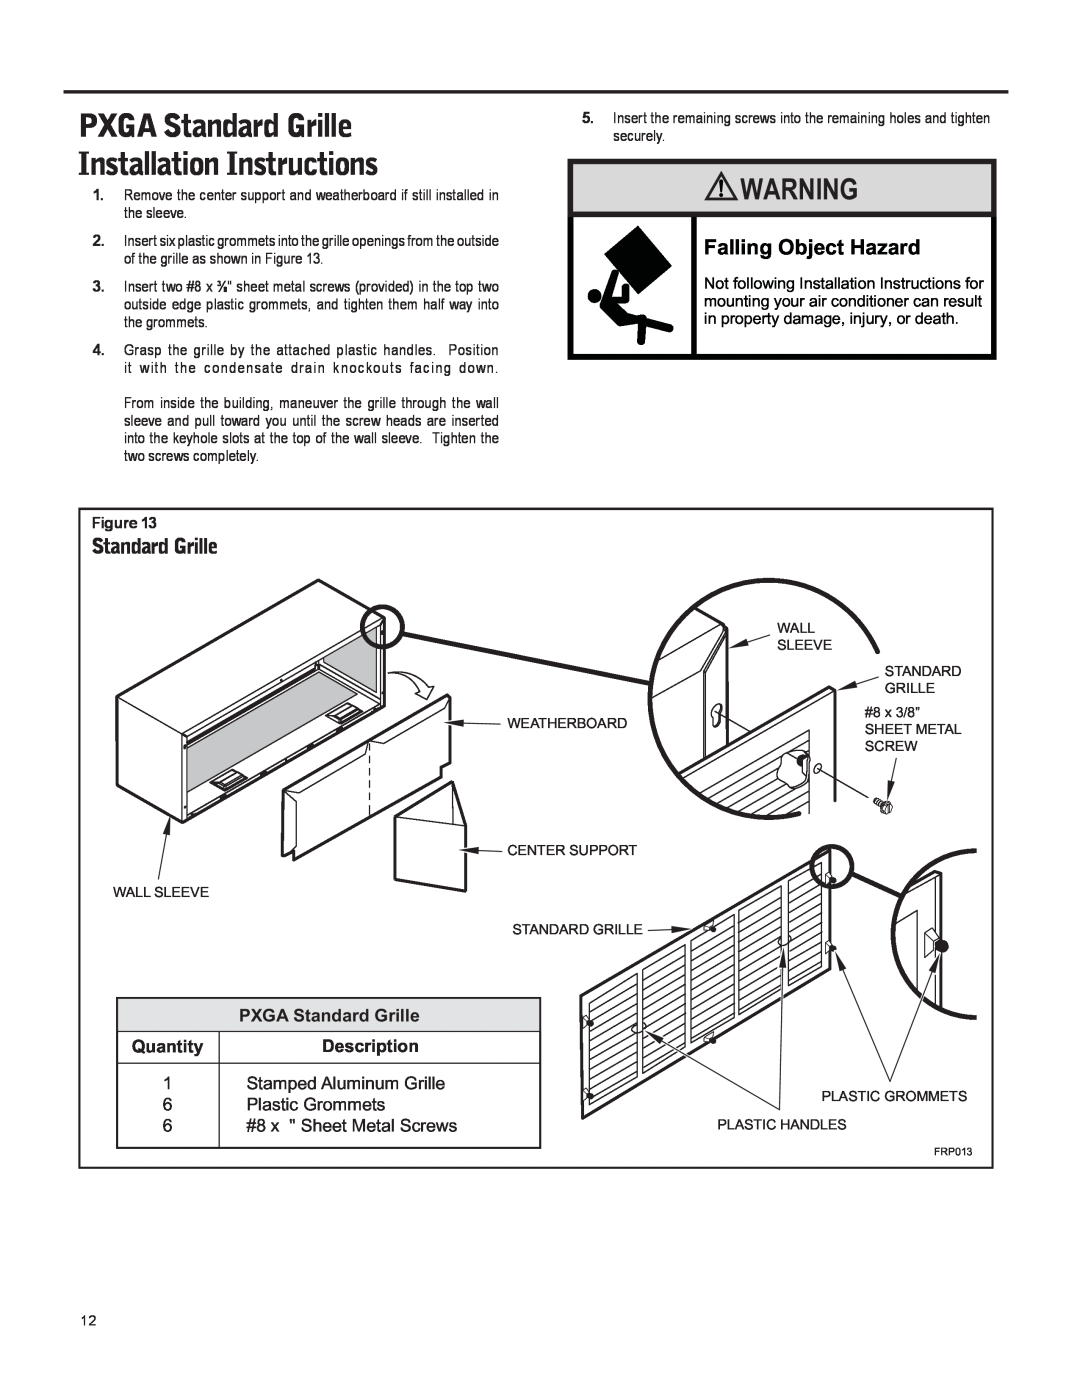 Friedrich 920-087-09 PXGA Standard Grille Installation Instructions, Falling Object Hazard, Quantity, Description 